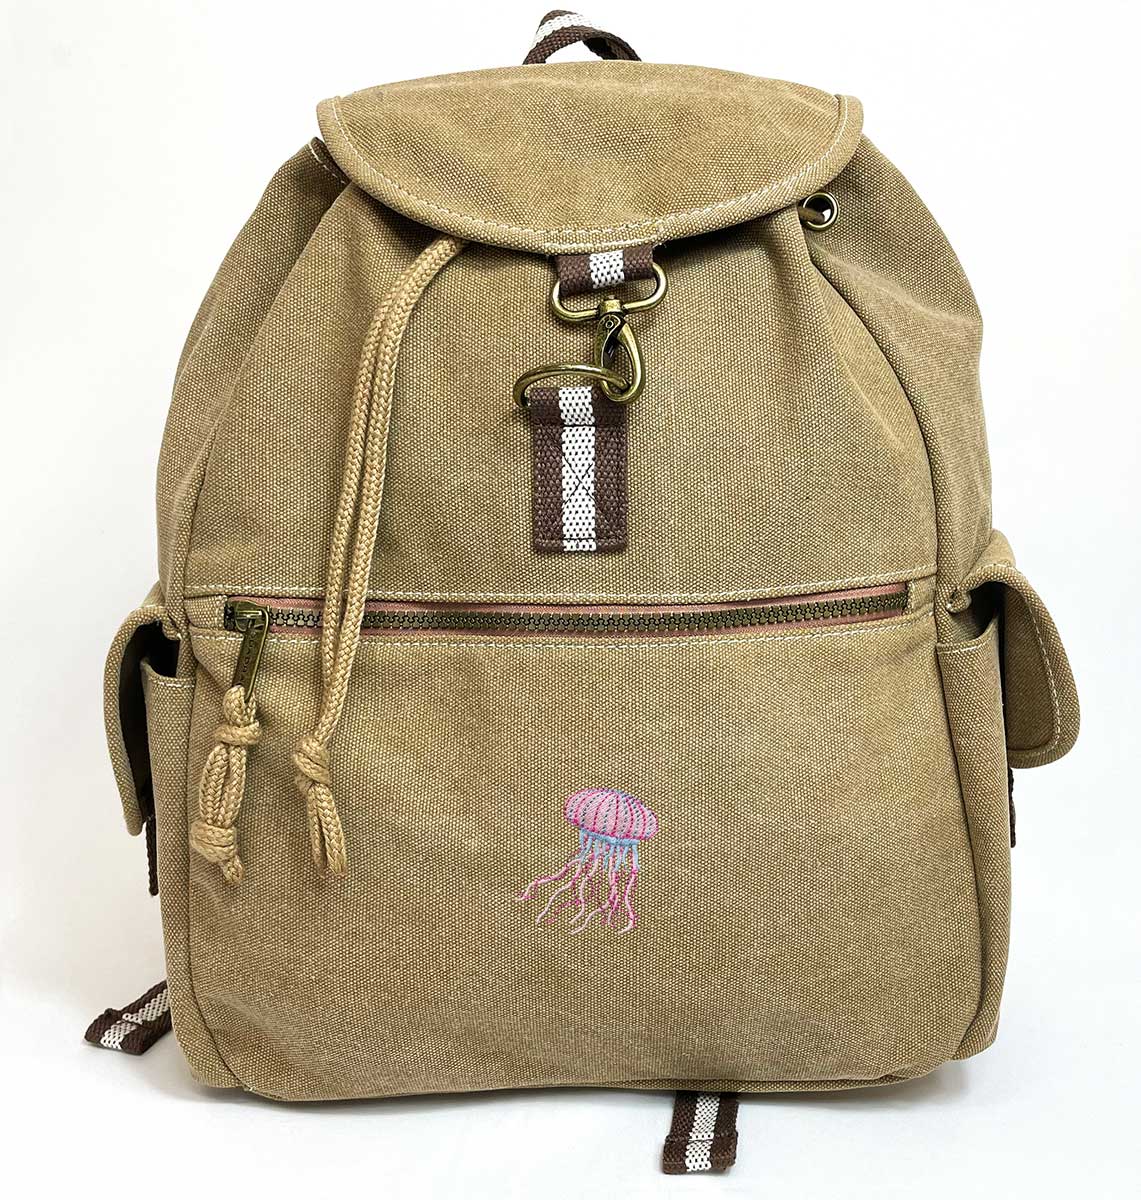 Jellyfish Vintage Canvas Backpack - Blue Panda